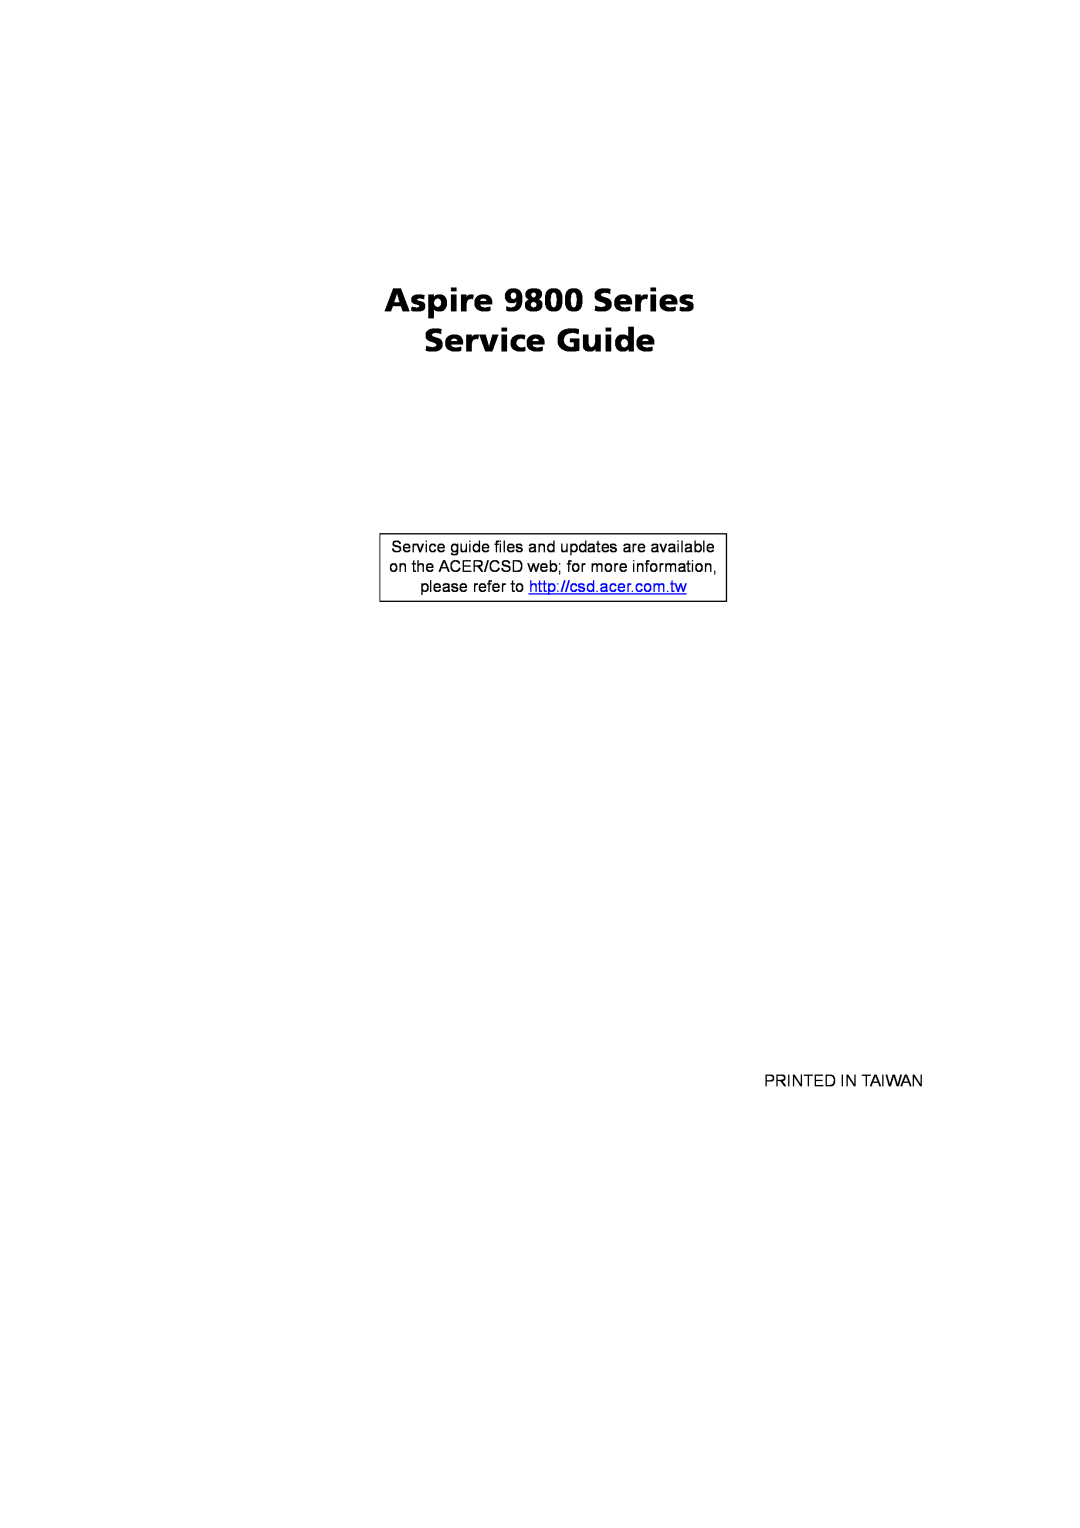 Acer manual Aspire 9800 Series Service Guide, Printed In Taiwan 